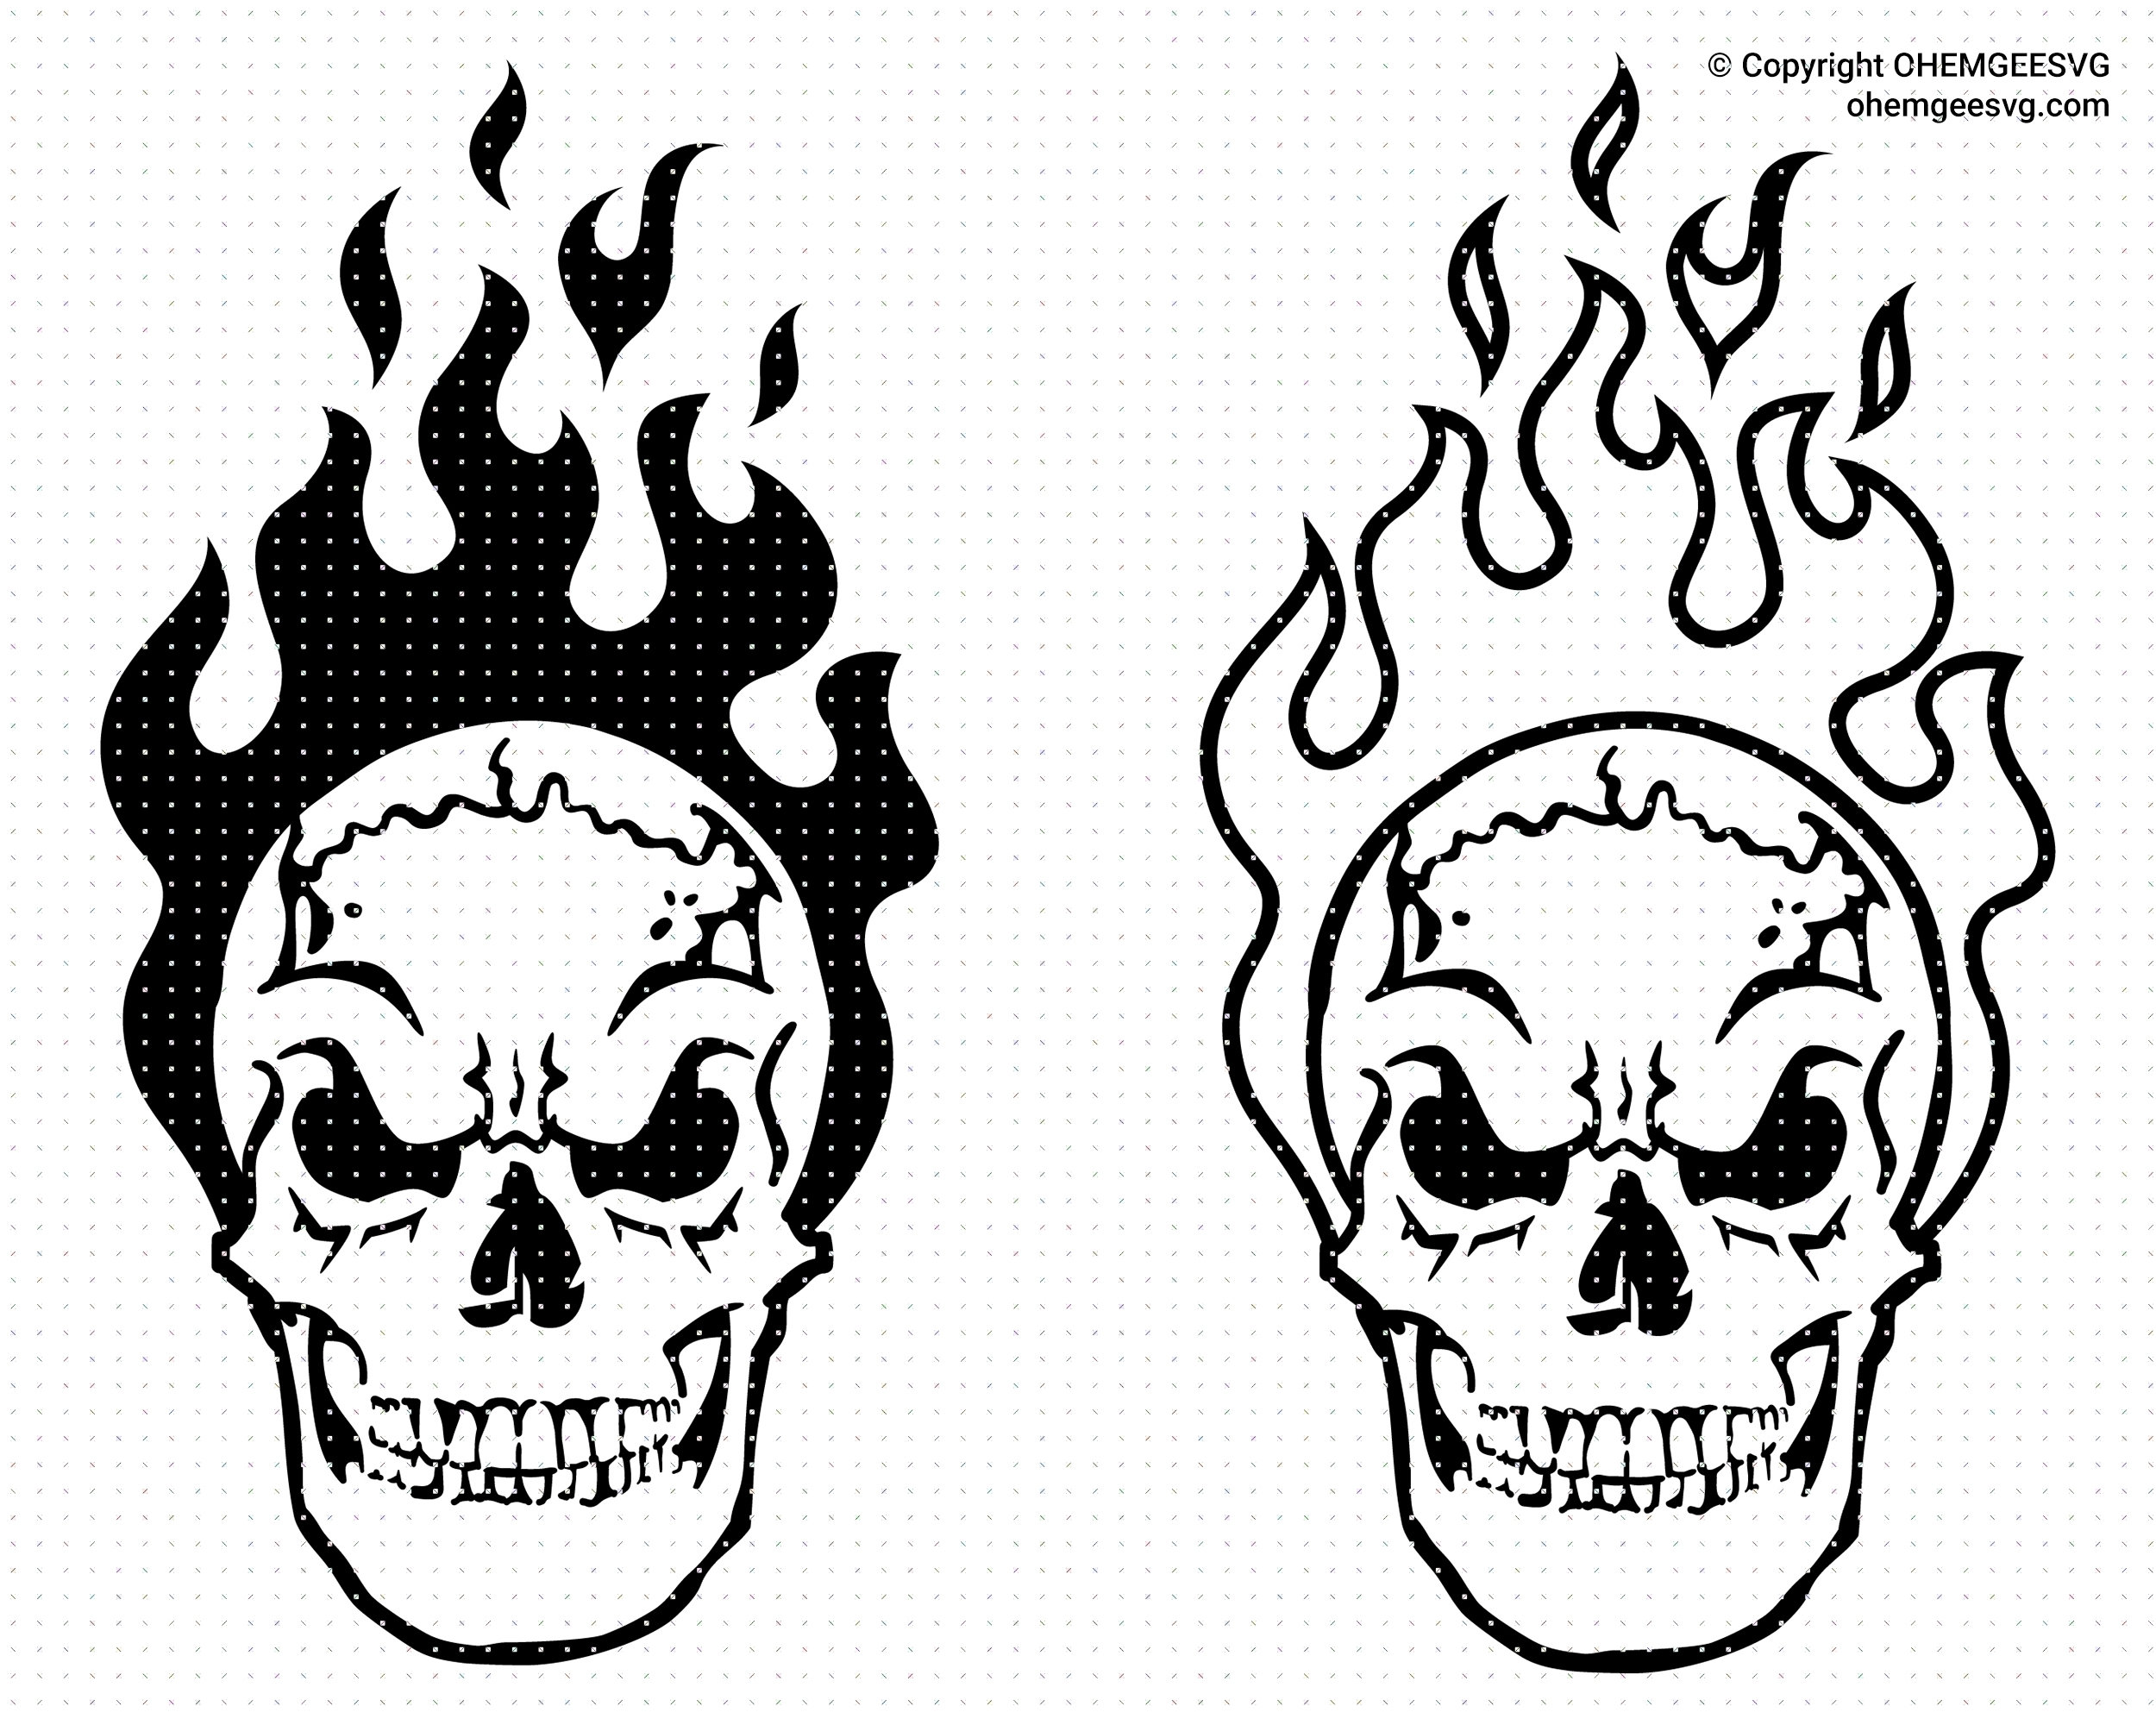 ArtStation - The Ubiquitous Flaming Skull